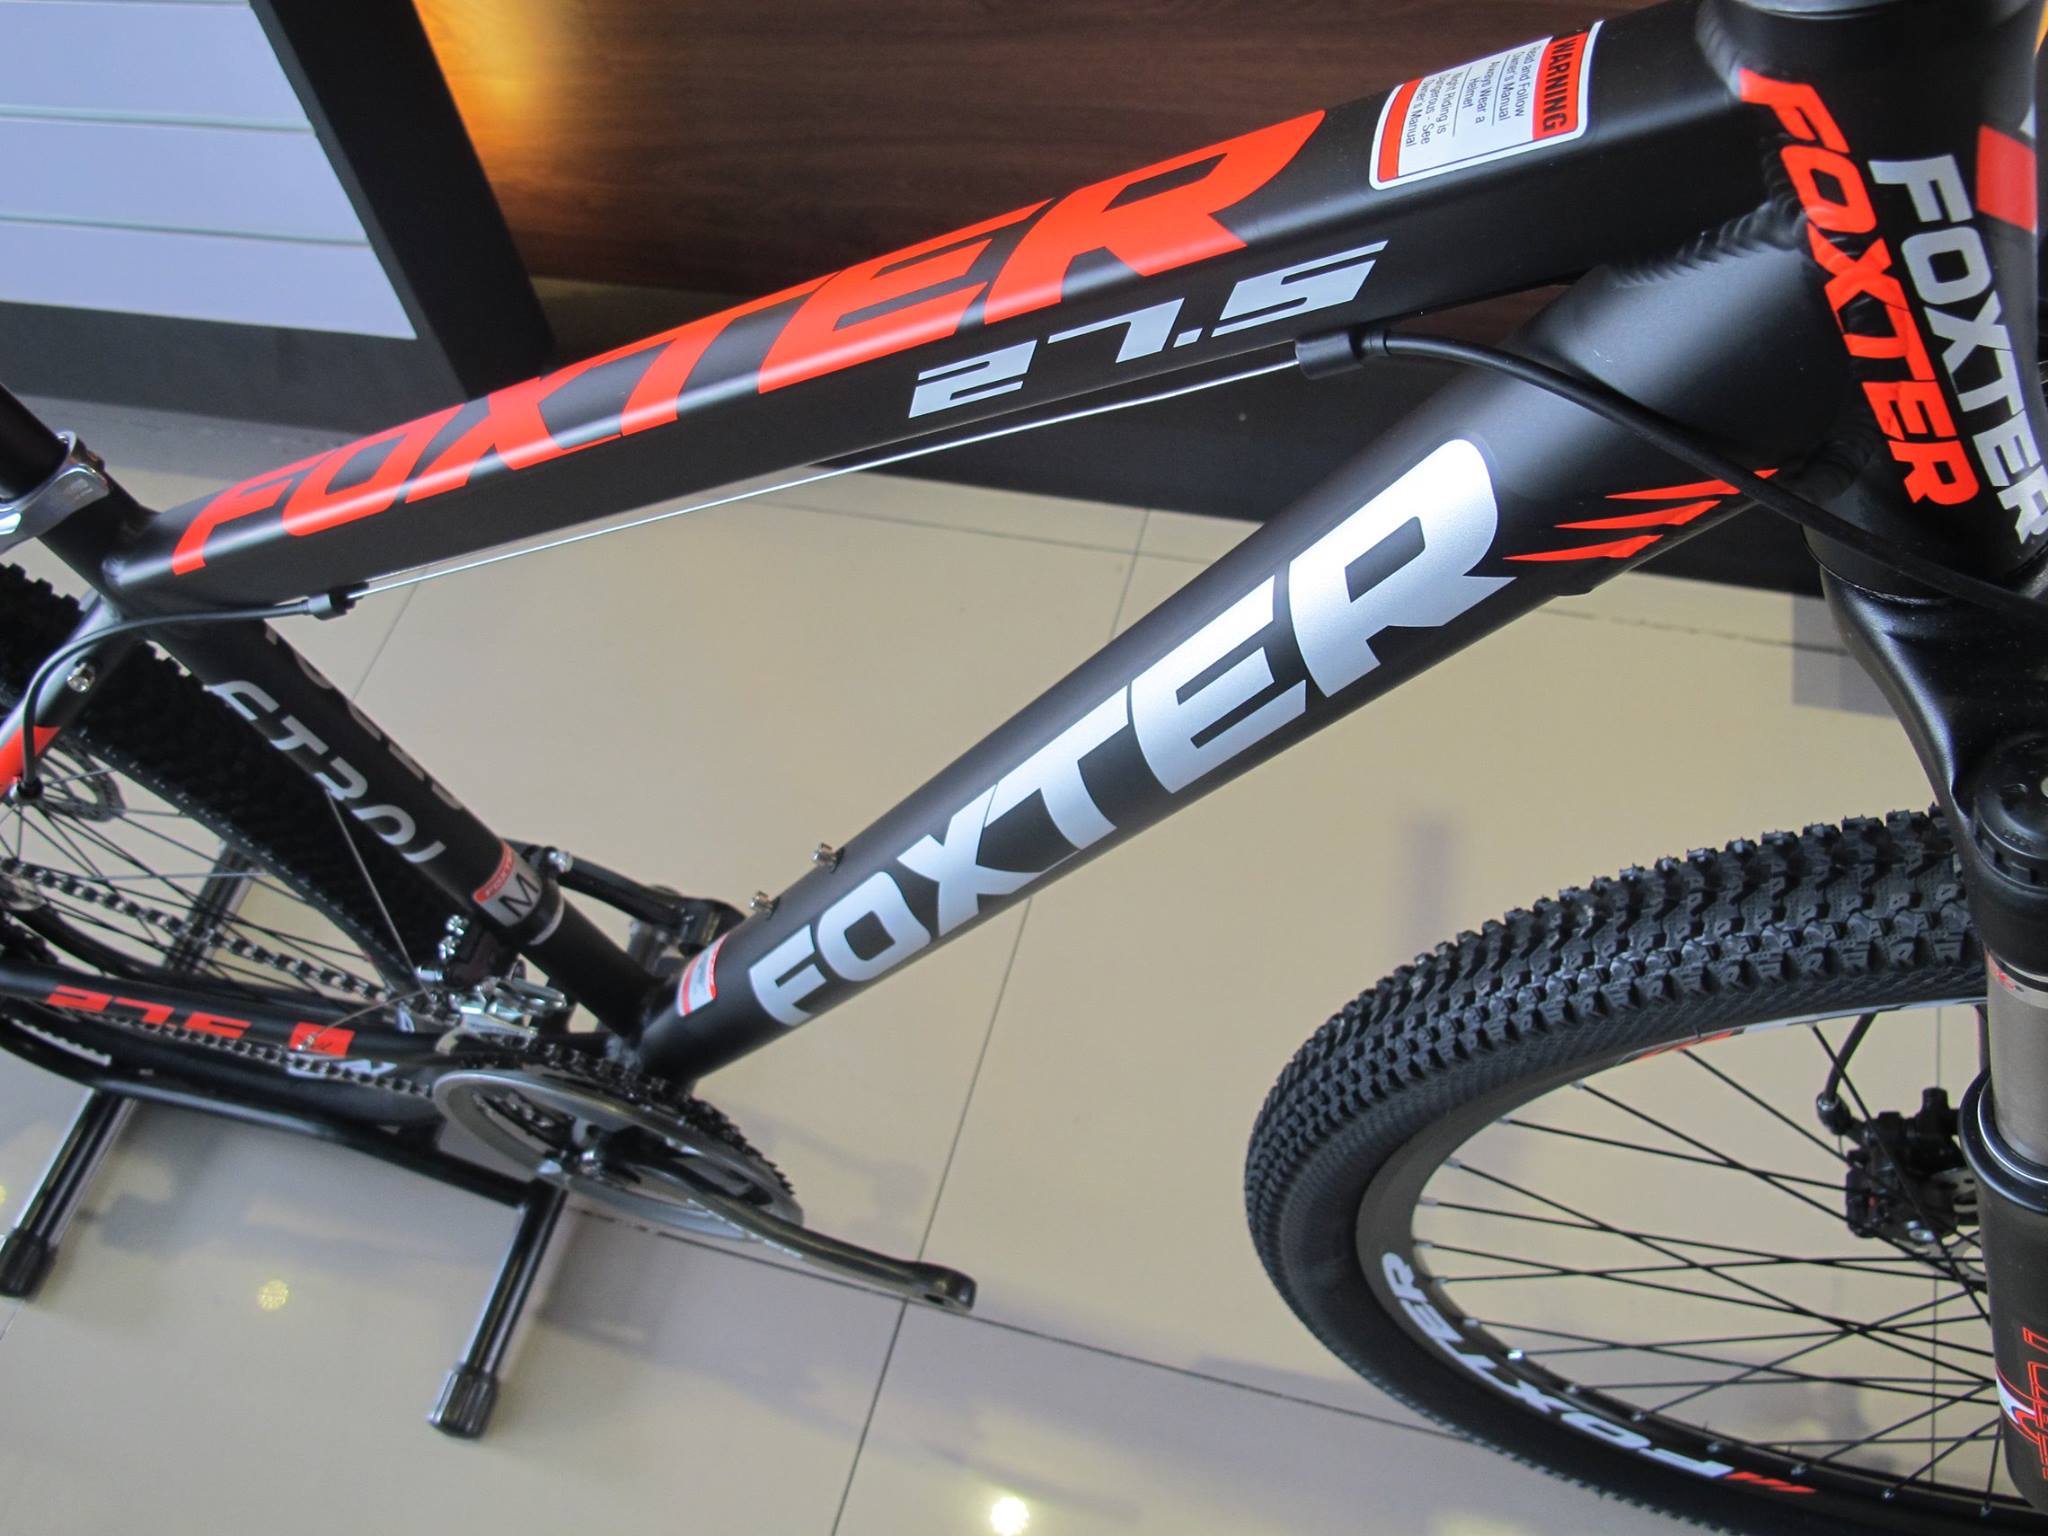 foxter mountain bike 27.5 price